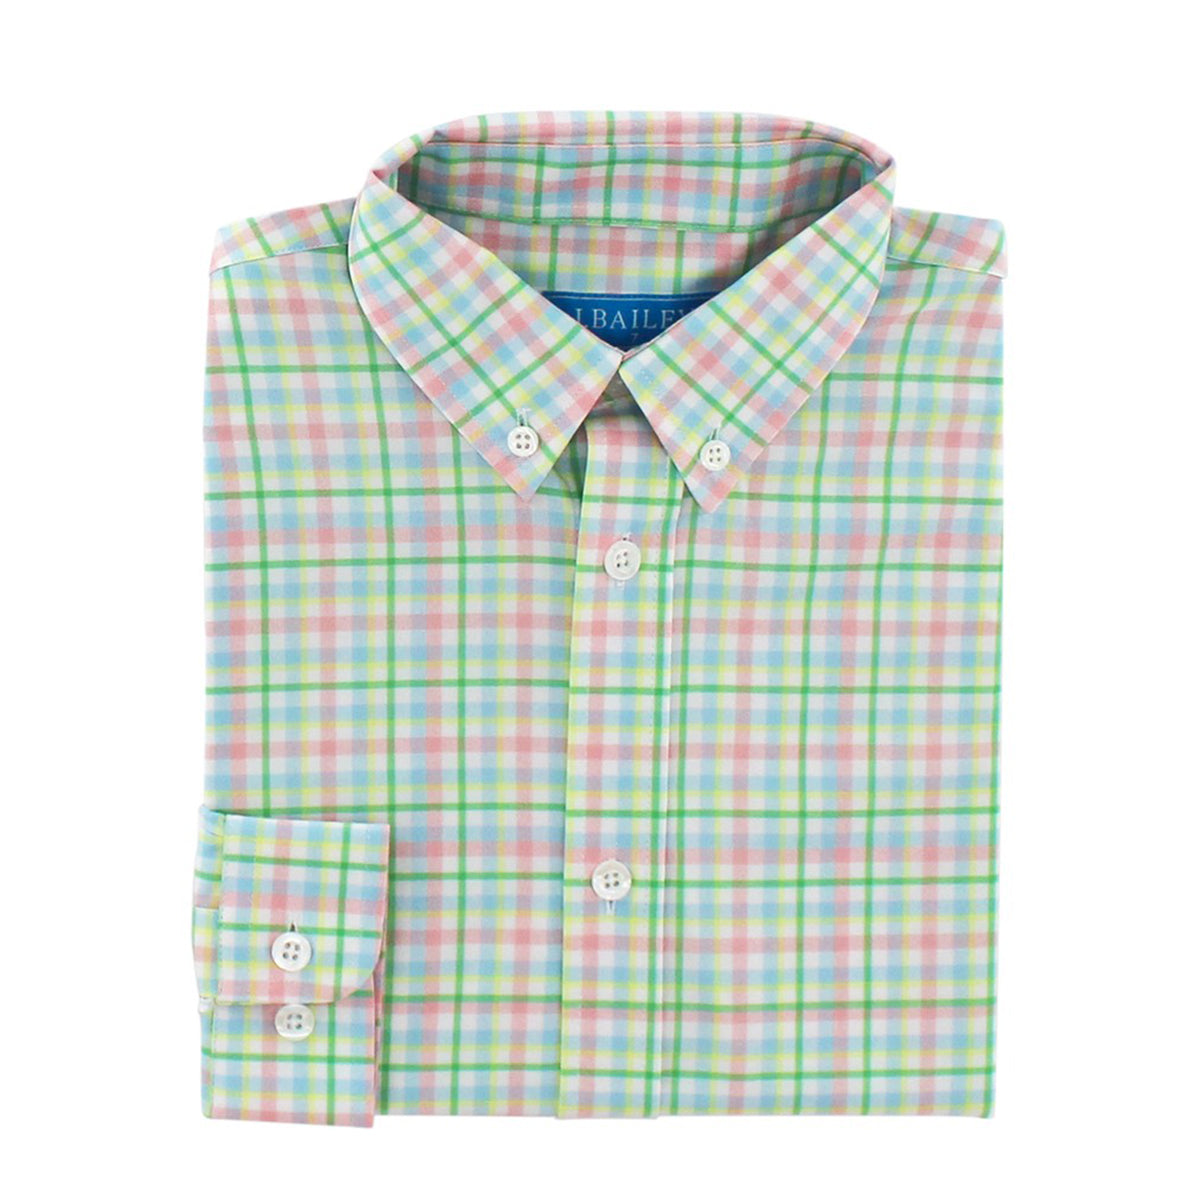 J. Bailey Toddler Boy's Springtime Plaid Long Sleeve Button Down Shirt